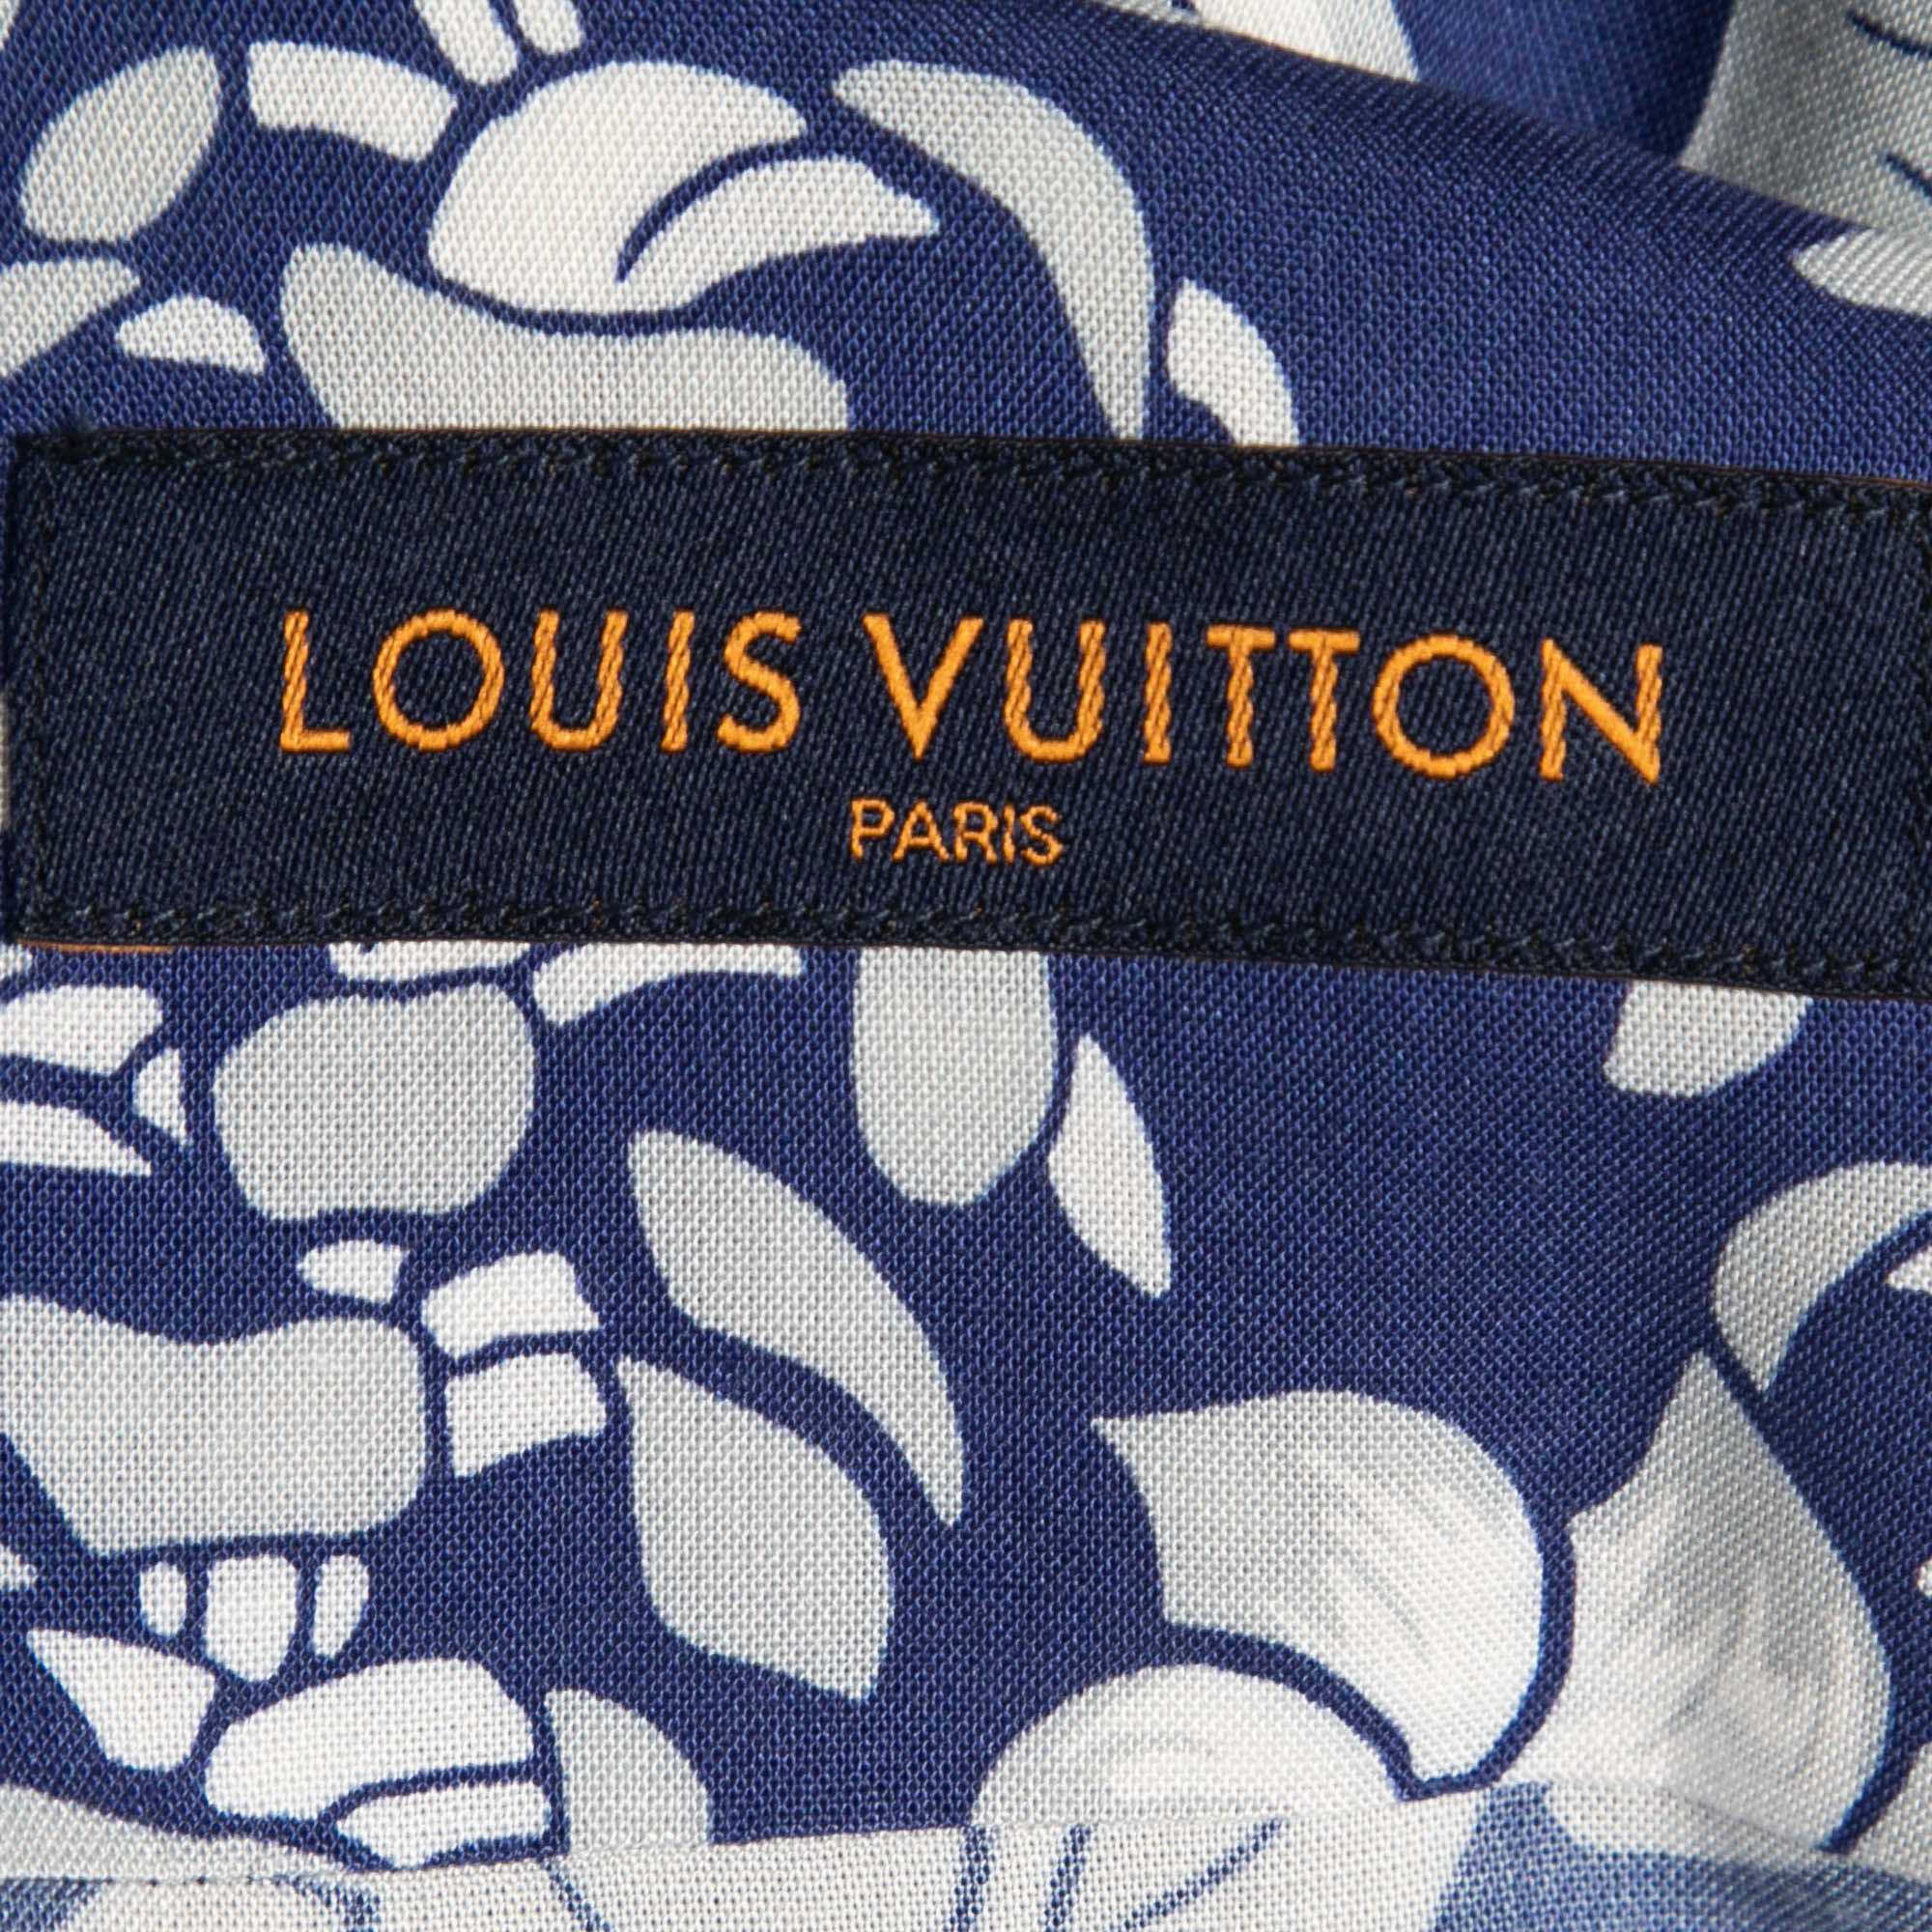 Louis Vuitton Blue Floral Printed Viscose Short Sleeve Shirt XS